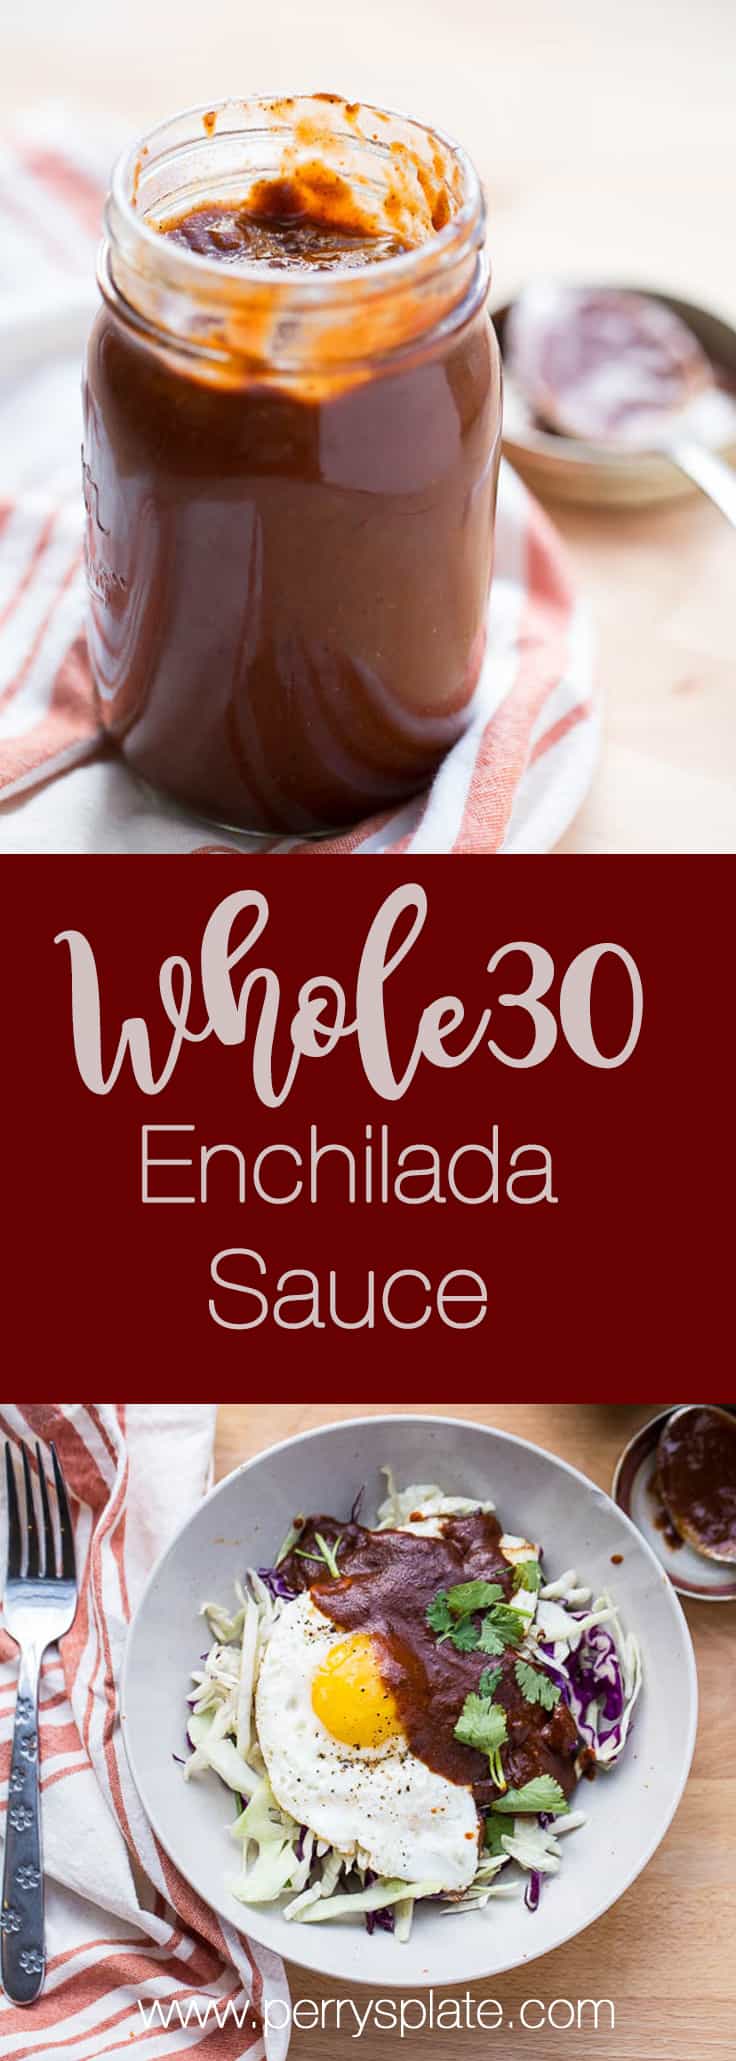 Whole30 Enchilada Sauce | Whole30 recipes | paleo recipes | enchilada recipes | perrysplate.com